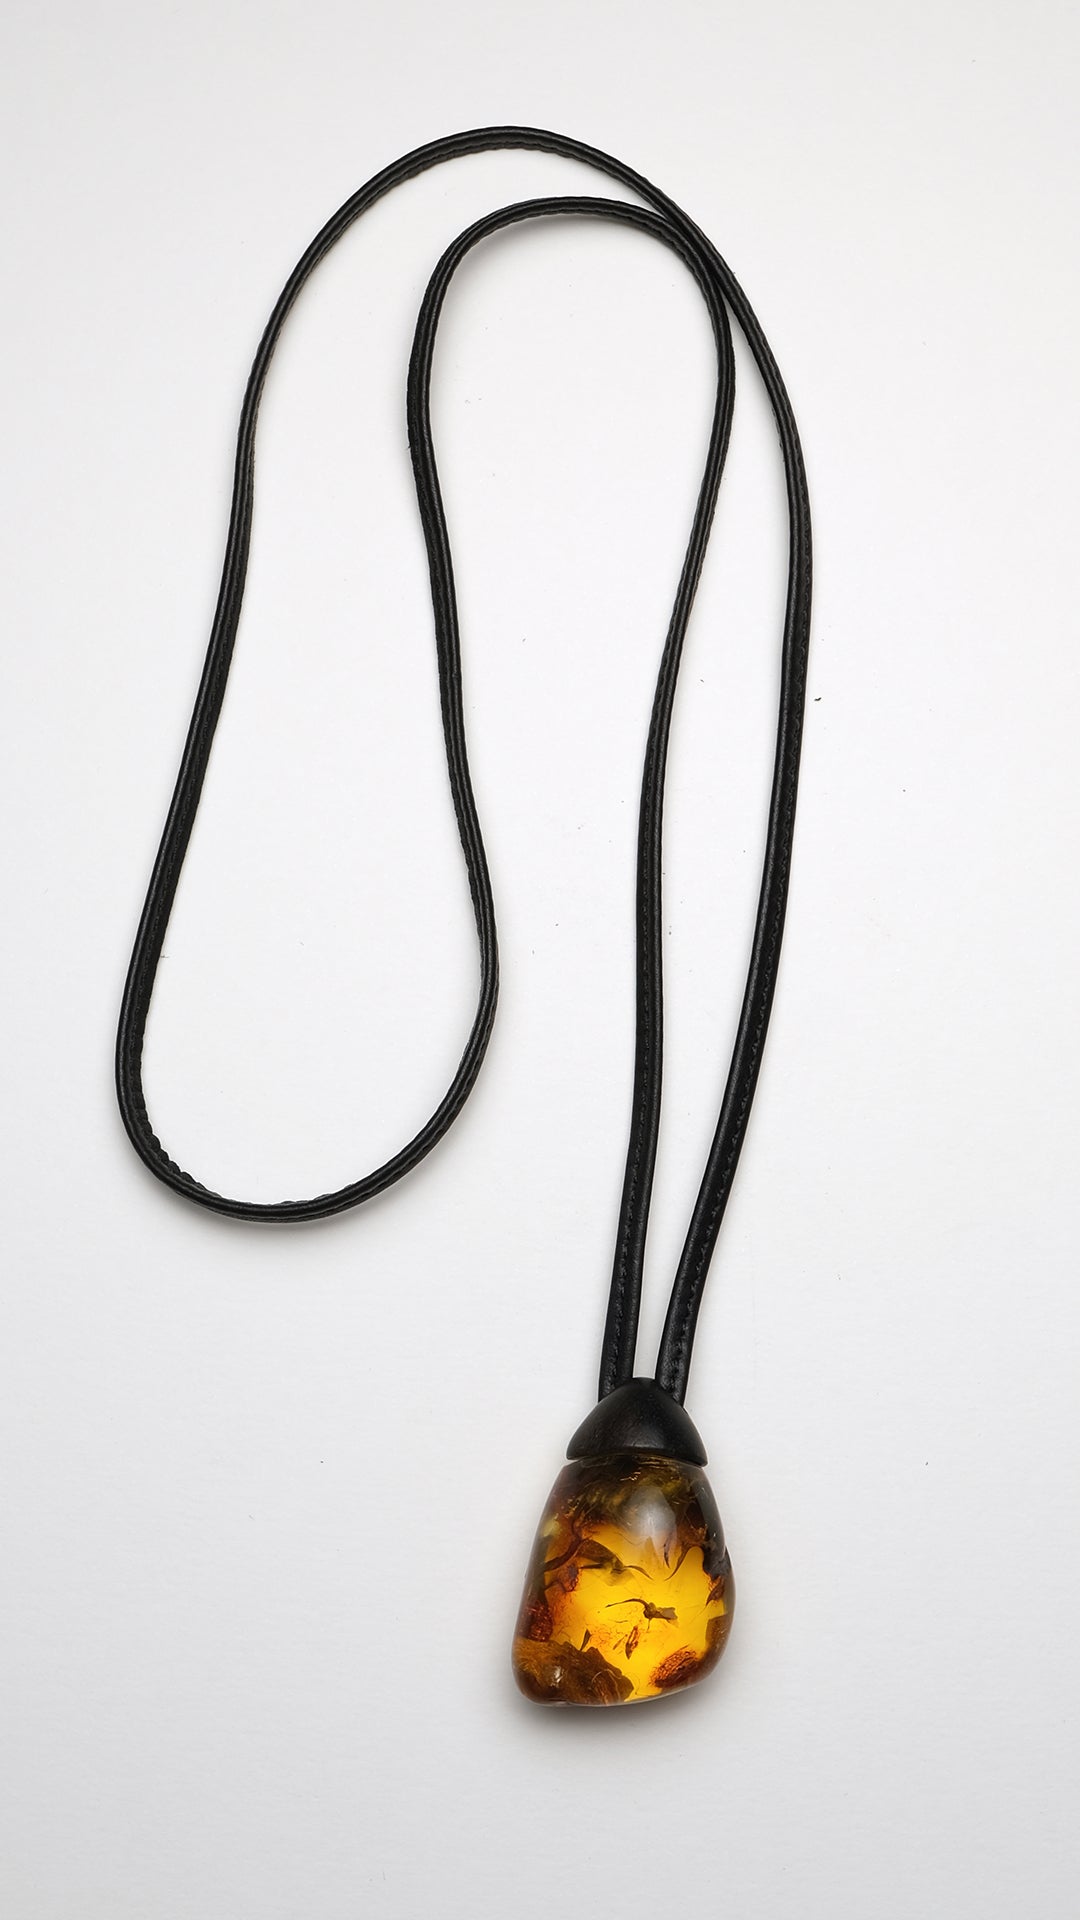 natural amber stone pendant with kamagong